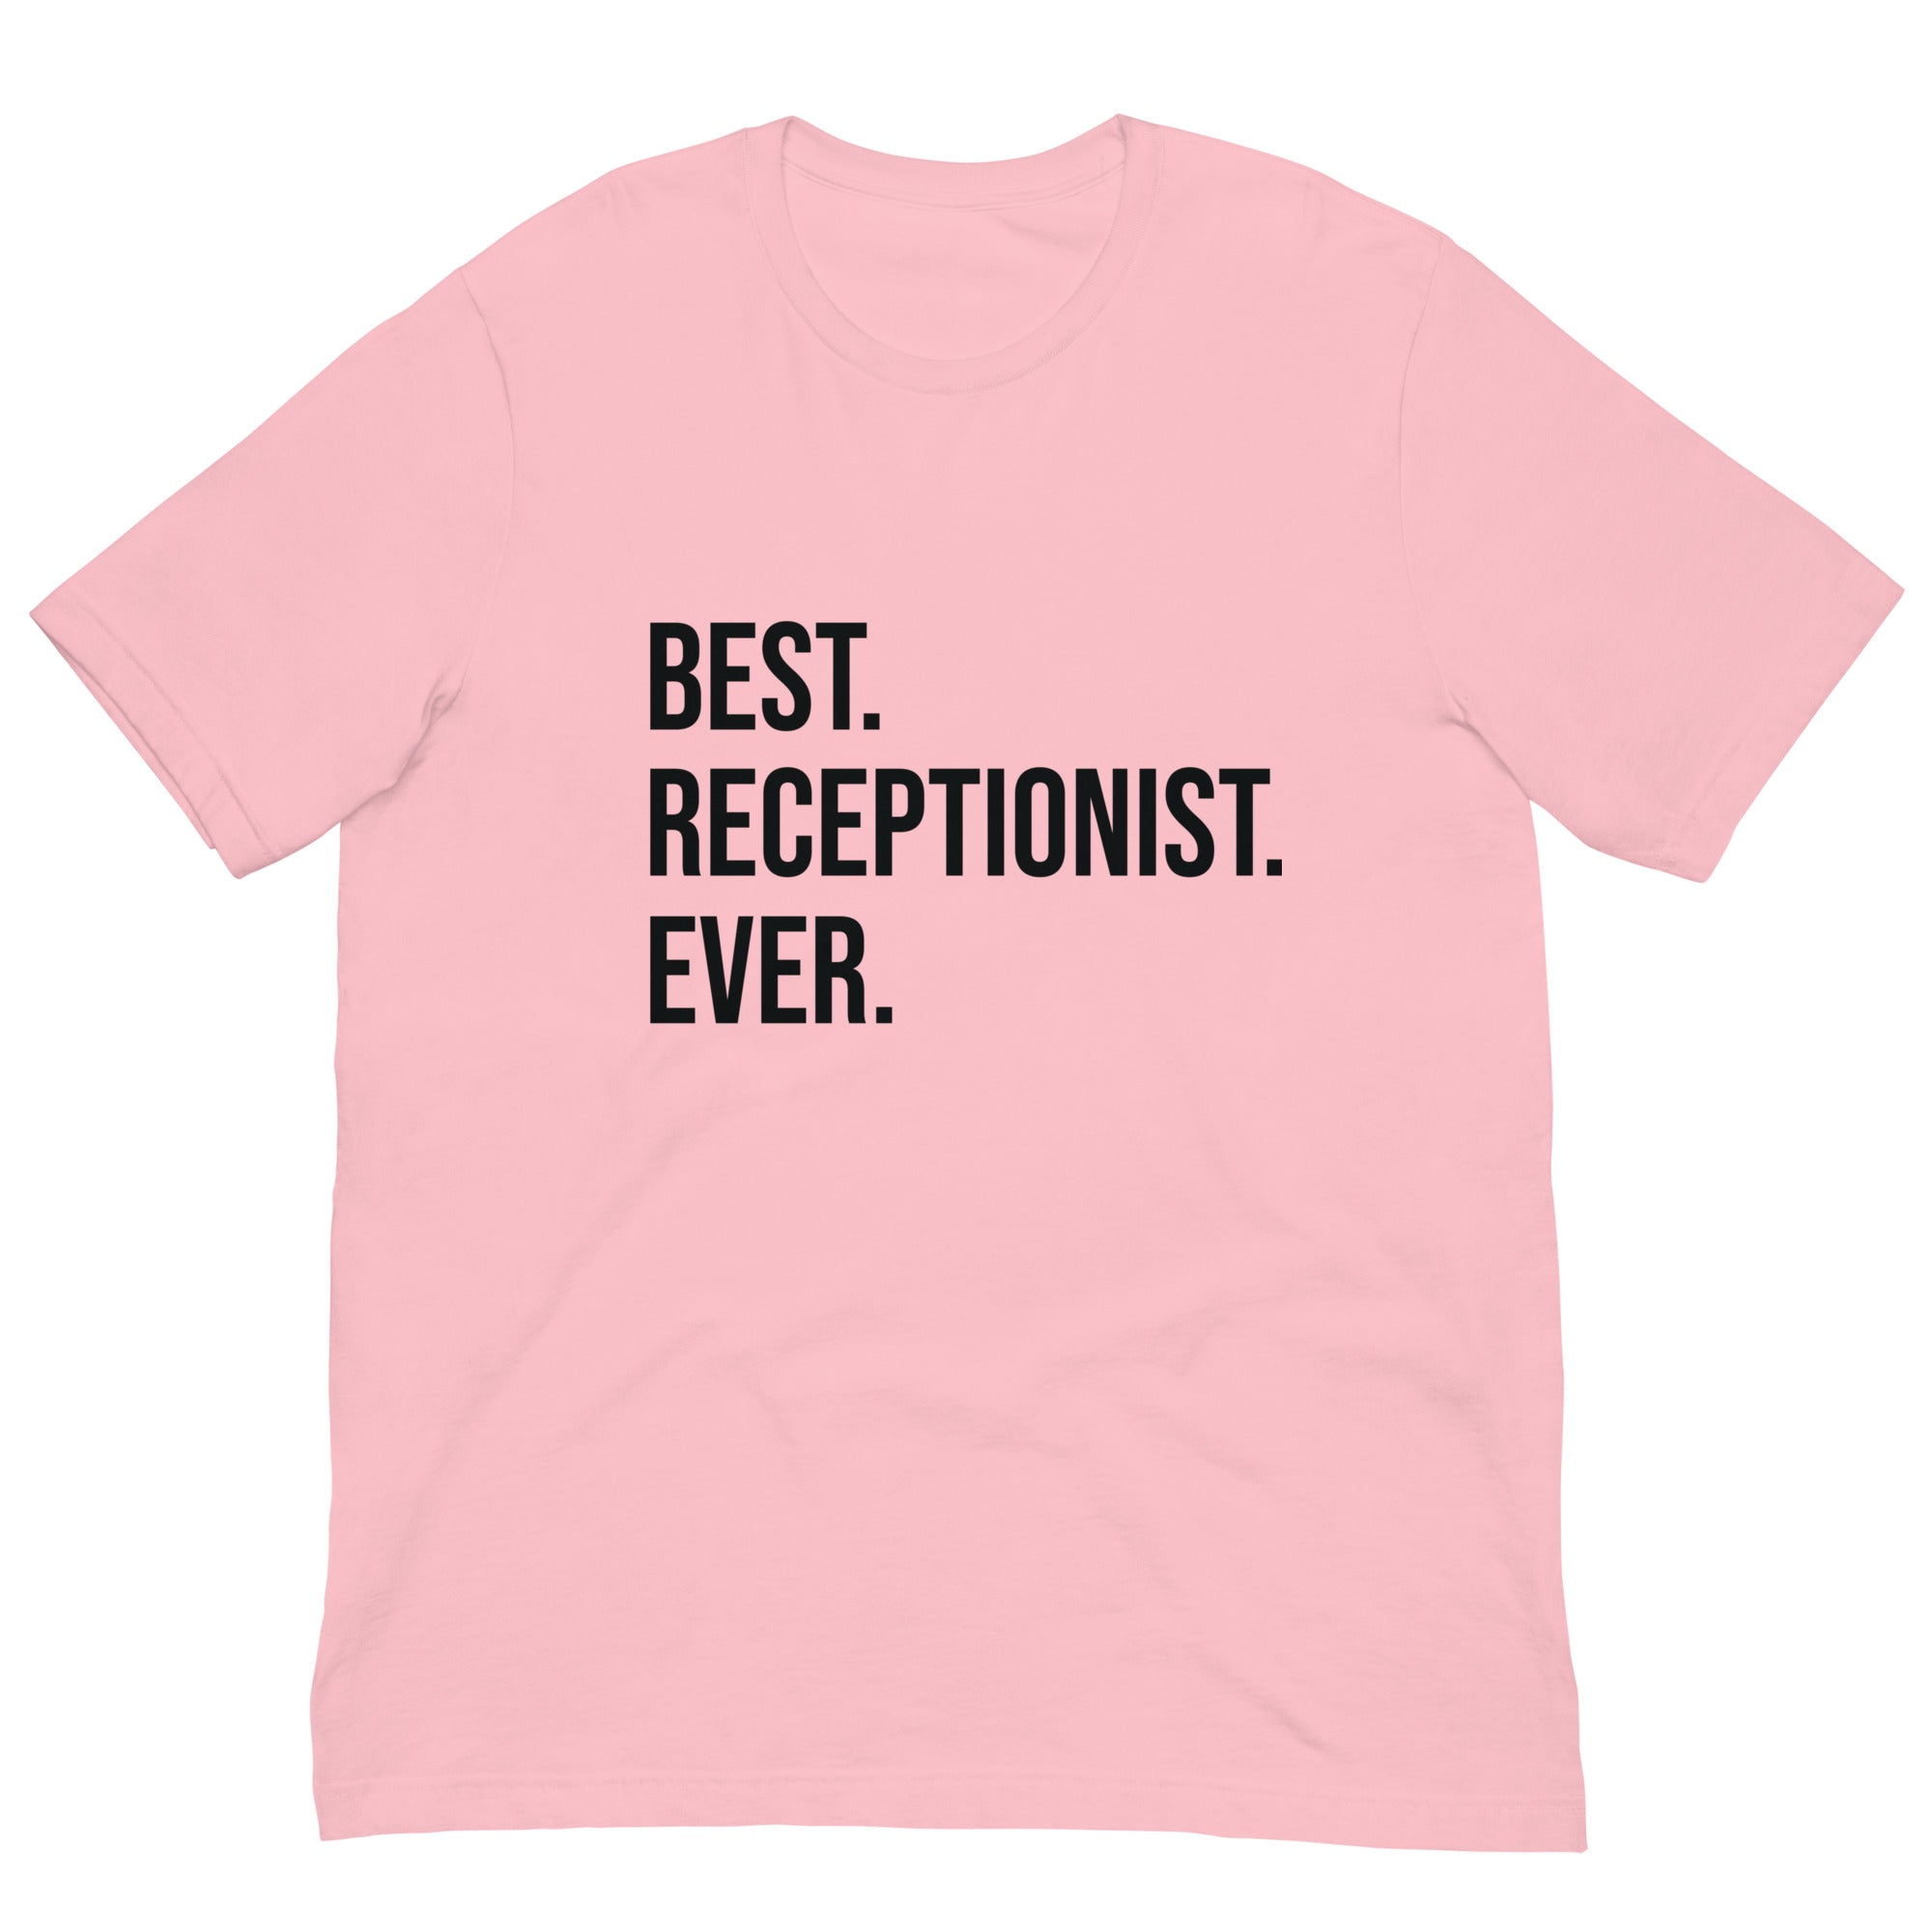 Unisex t-shirt | Best. Receptionist. Ever.